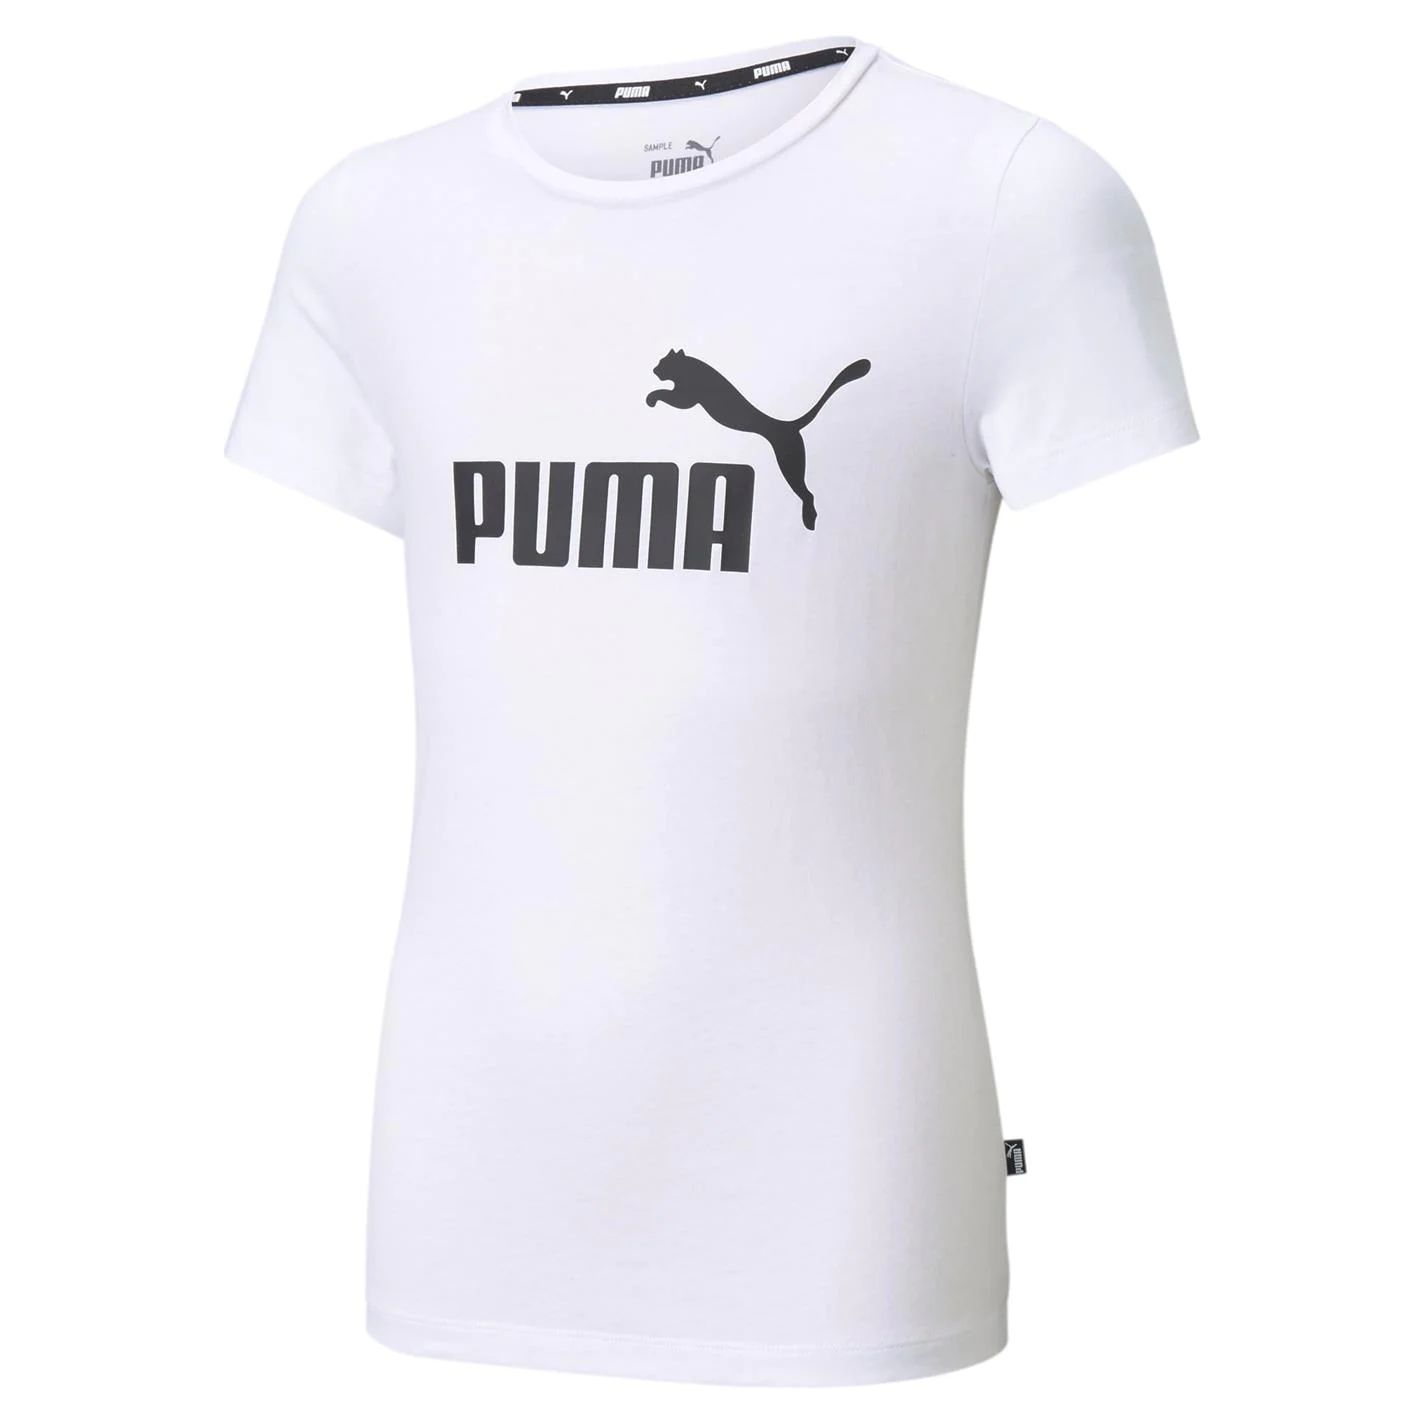 dětské tričko PUMA - WHITE/BLACK - 158 13 let